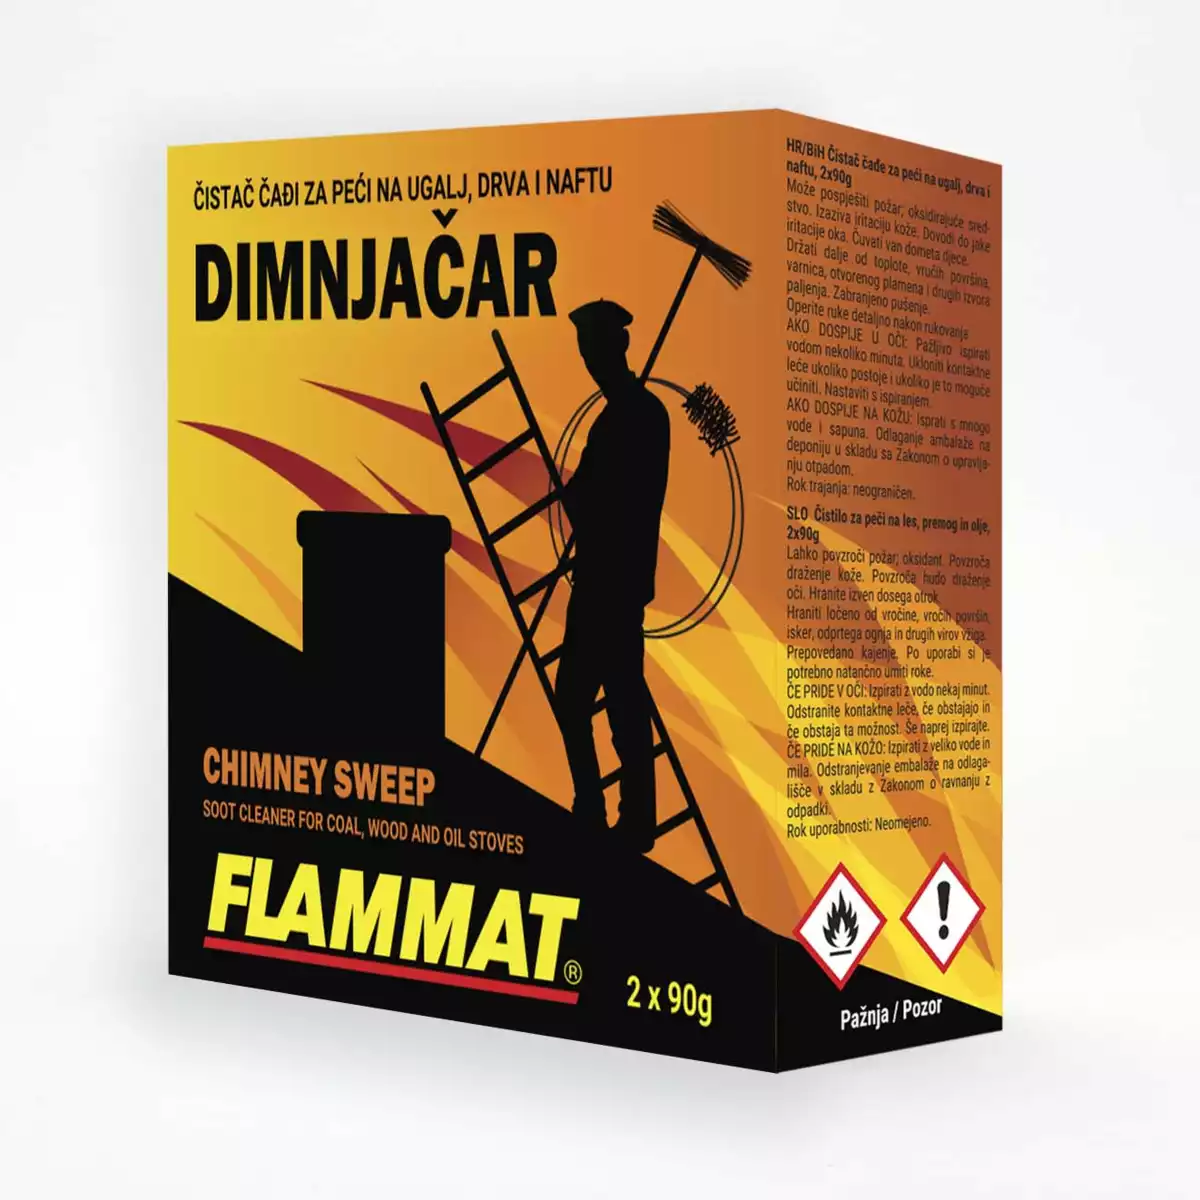 dimnicar_dimnikar_flammat.jpg.webp